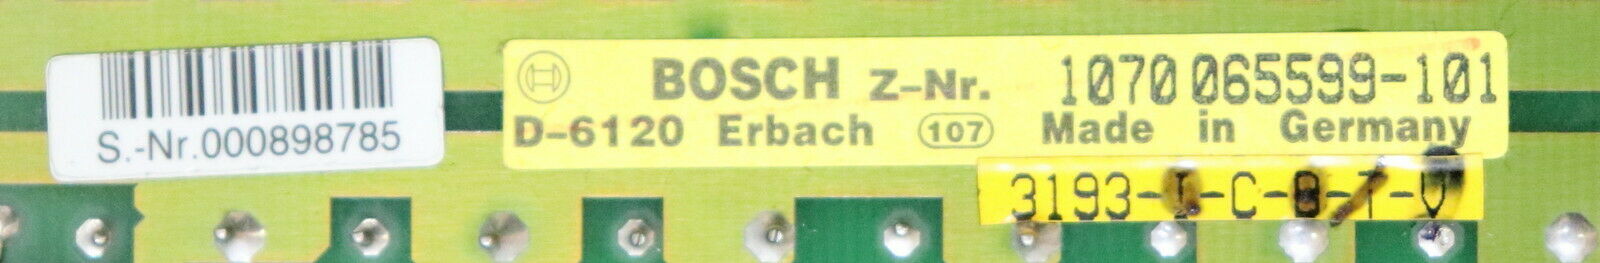 BOSCH CNC Servo-Controller SERVO i Verbaute Platinen mit Mat.Nr. 1070065596-105